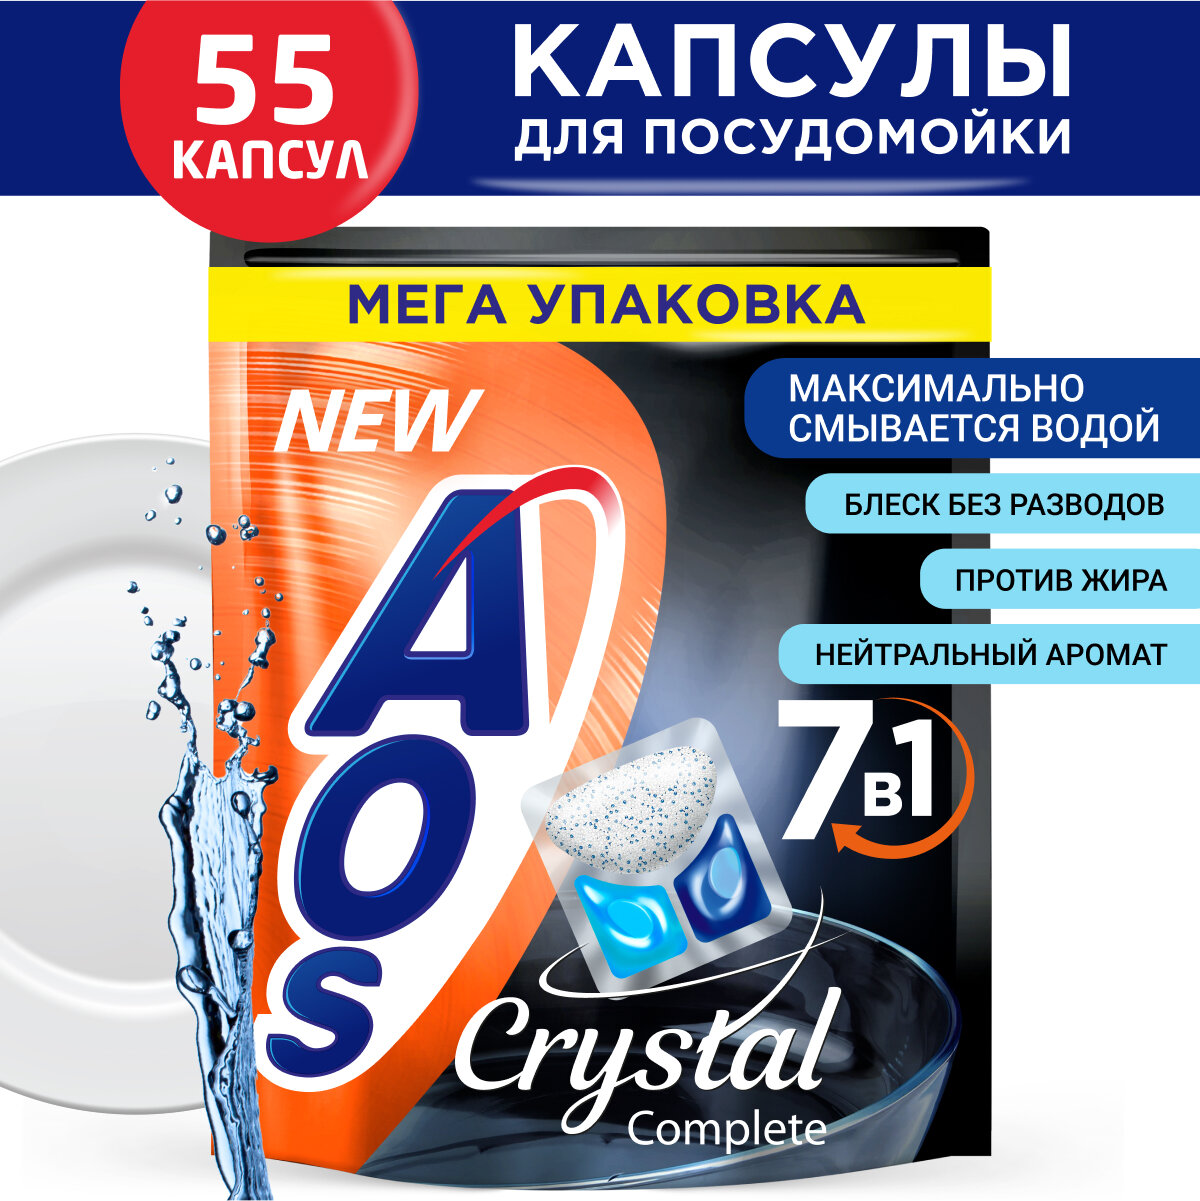 Гибридные капсулы для АПМ "AOS Crystal (Complete)" 55 шт. Doy-pack - фотография № 2